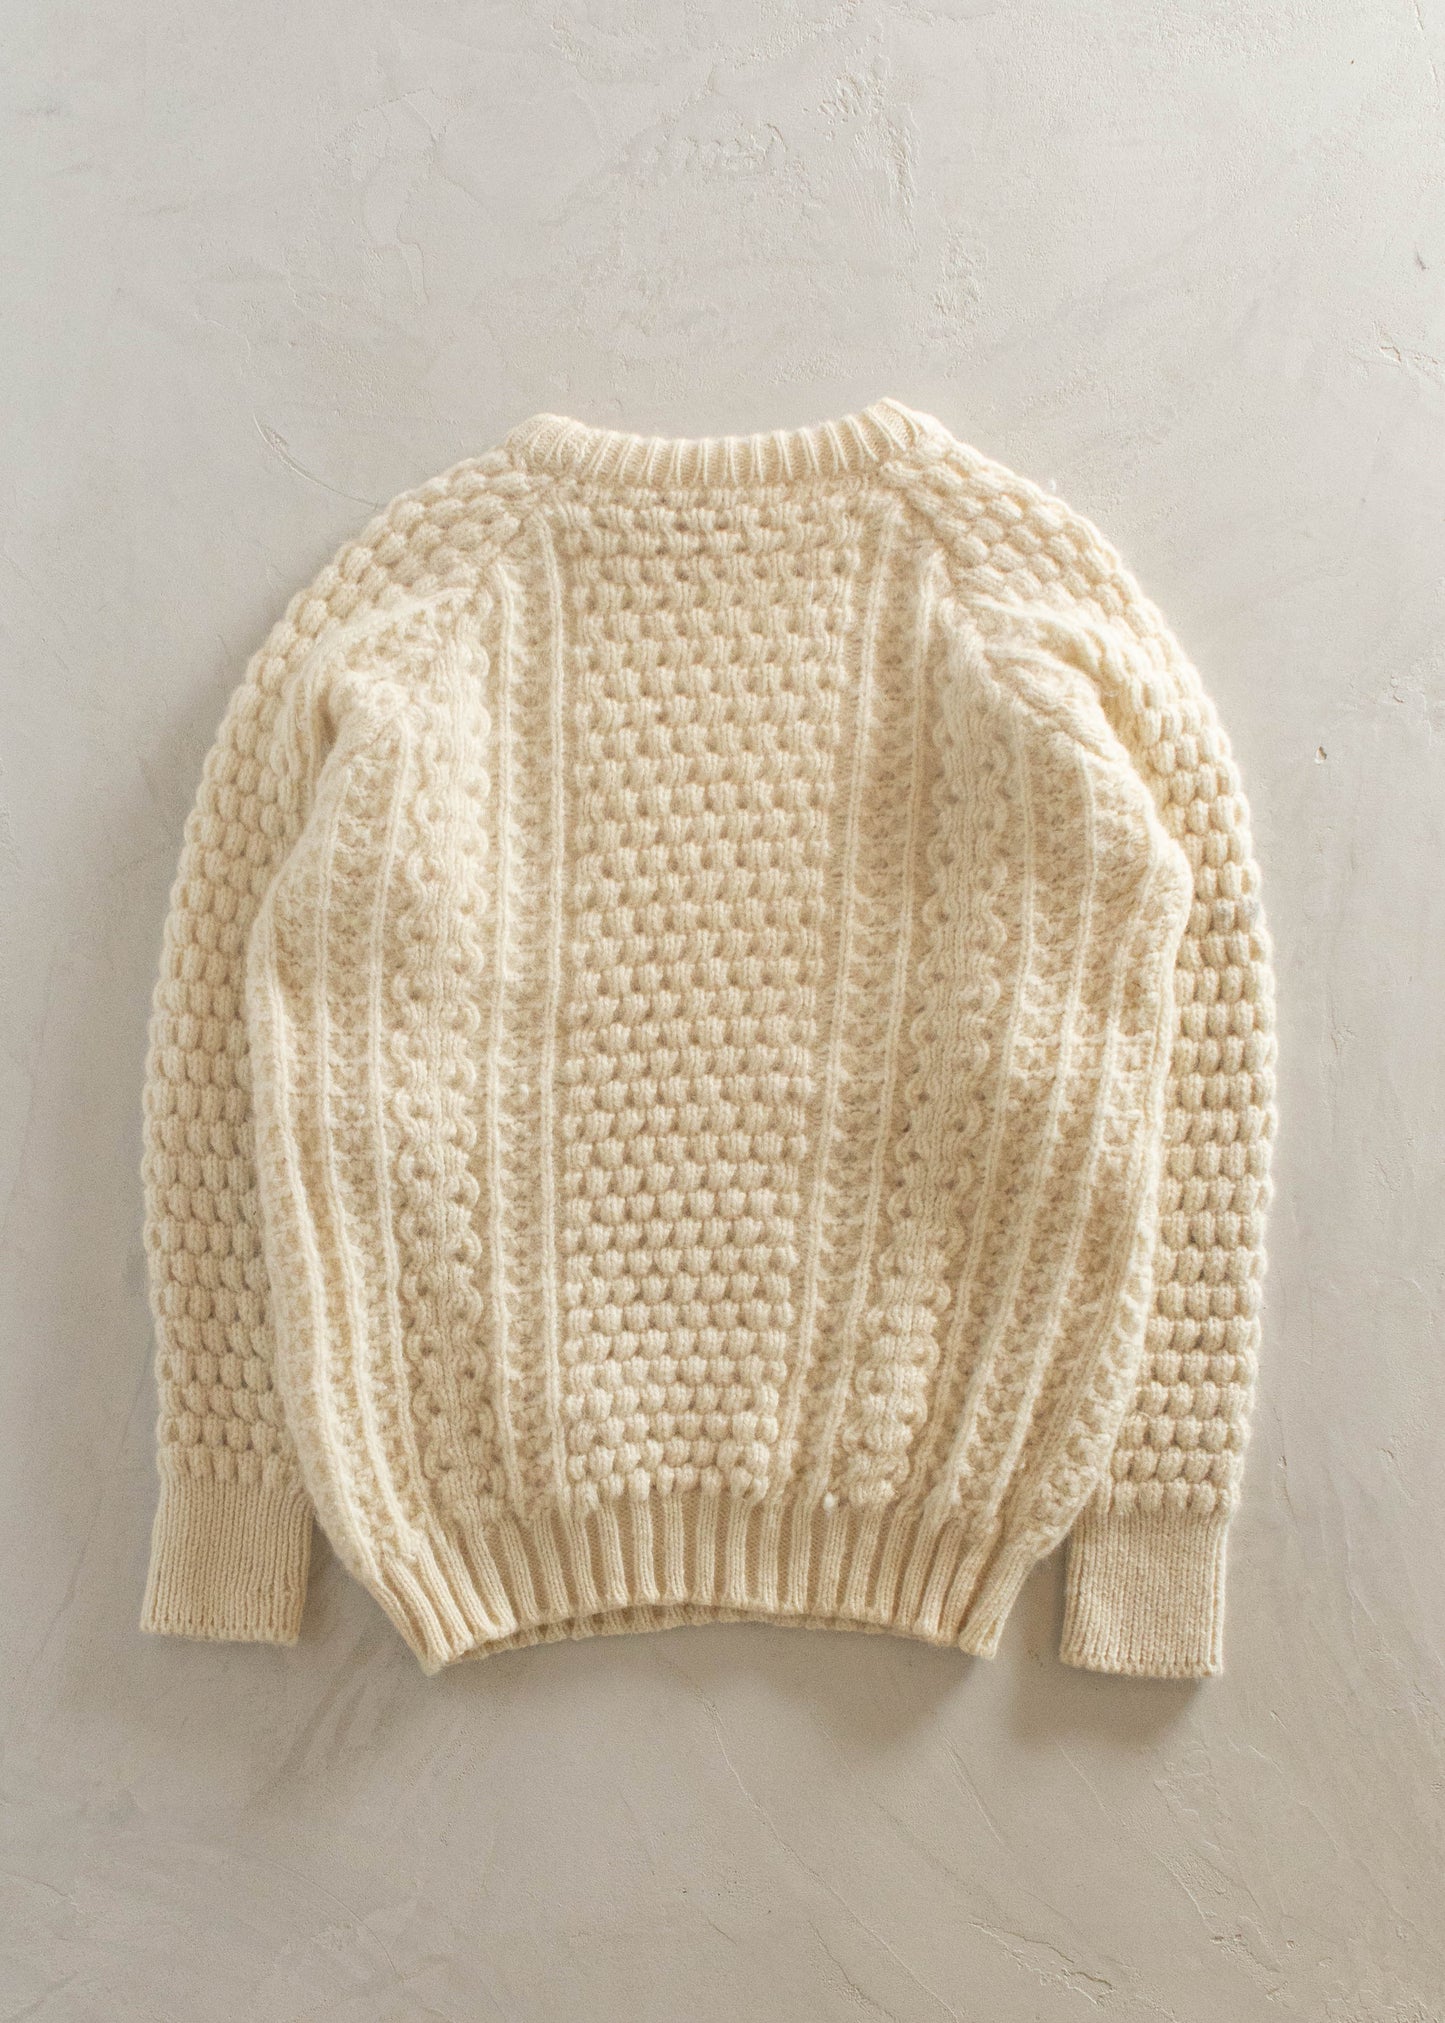 1980s Glen Columb Kille Cable Knit Wool Fisherman Sweater Size M/L